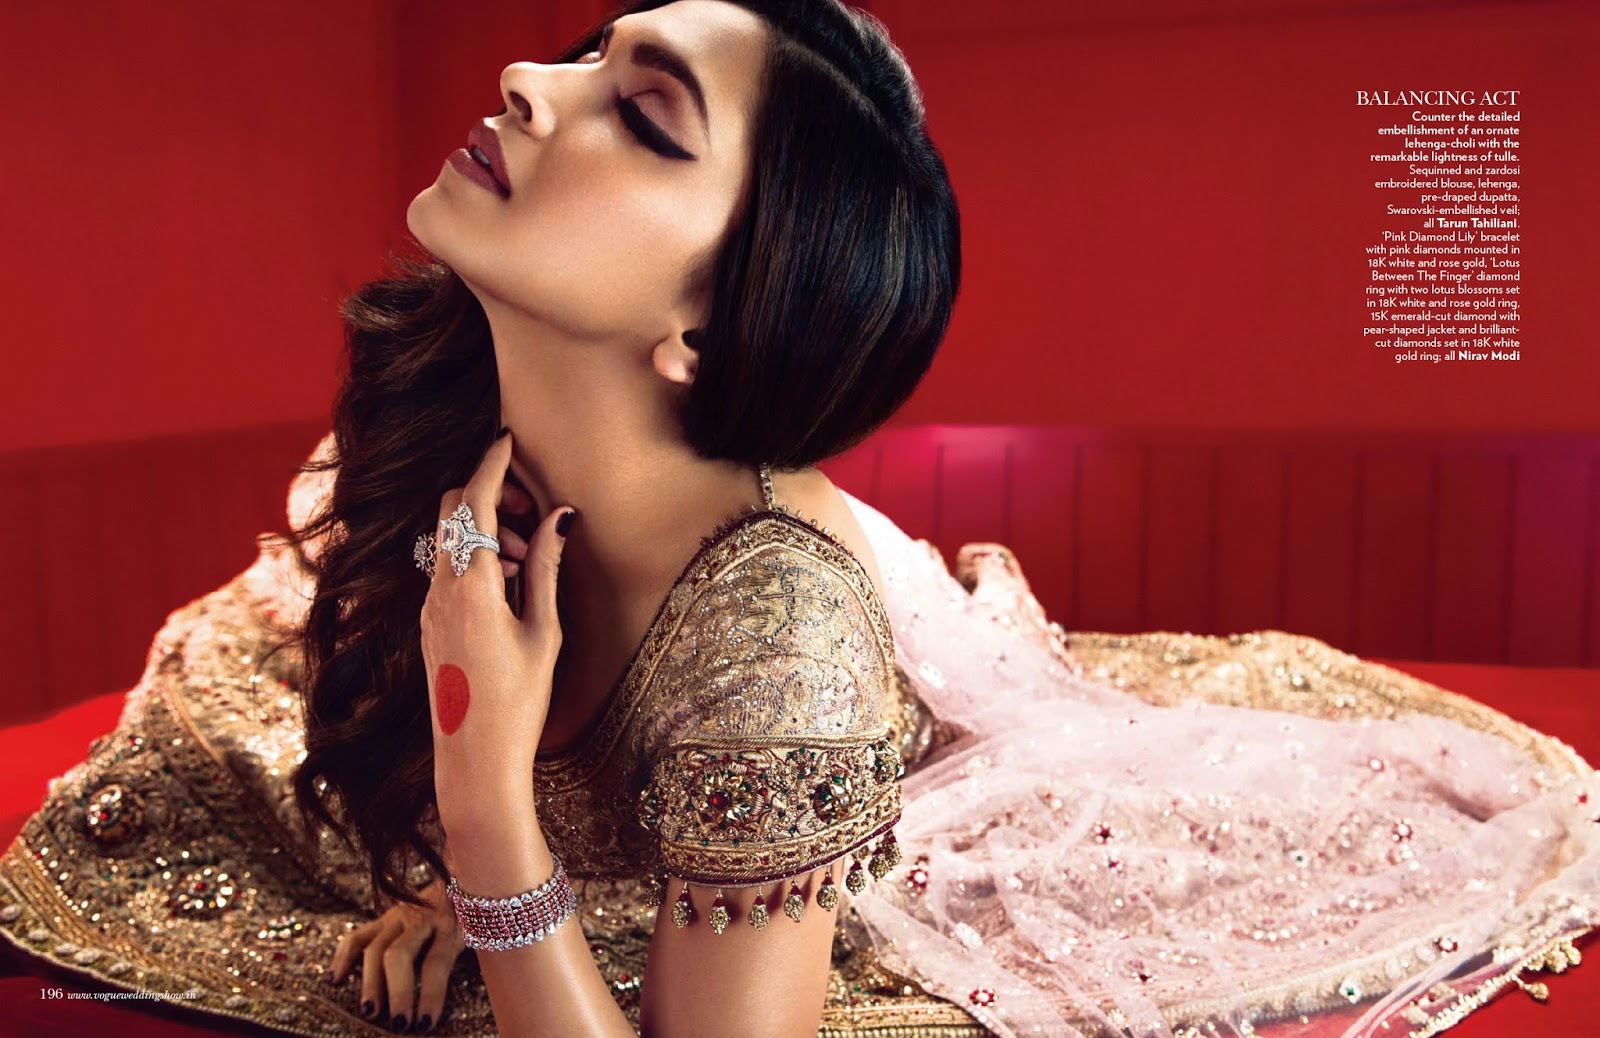 Deepika Padukone for Vogue India